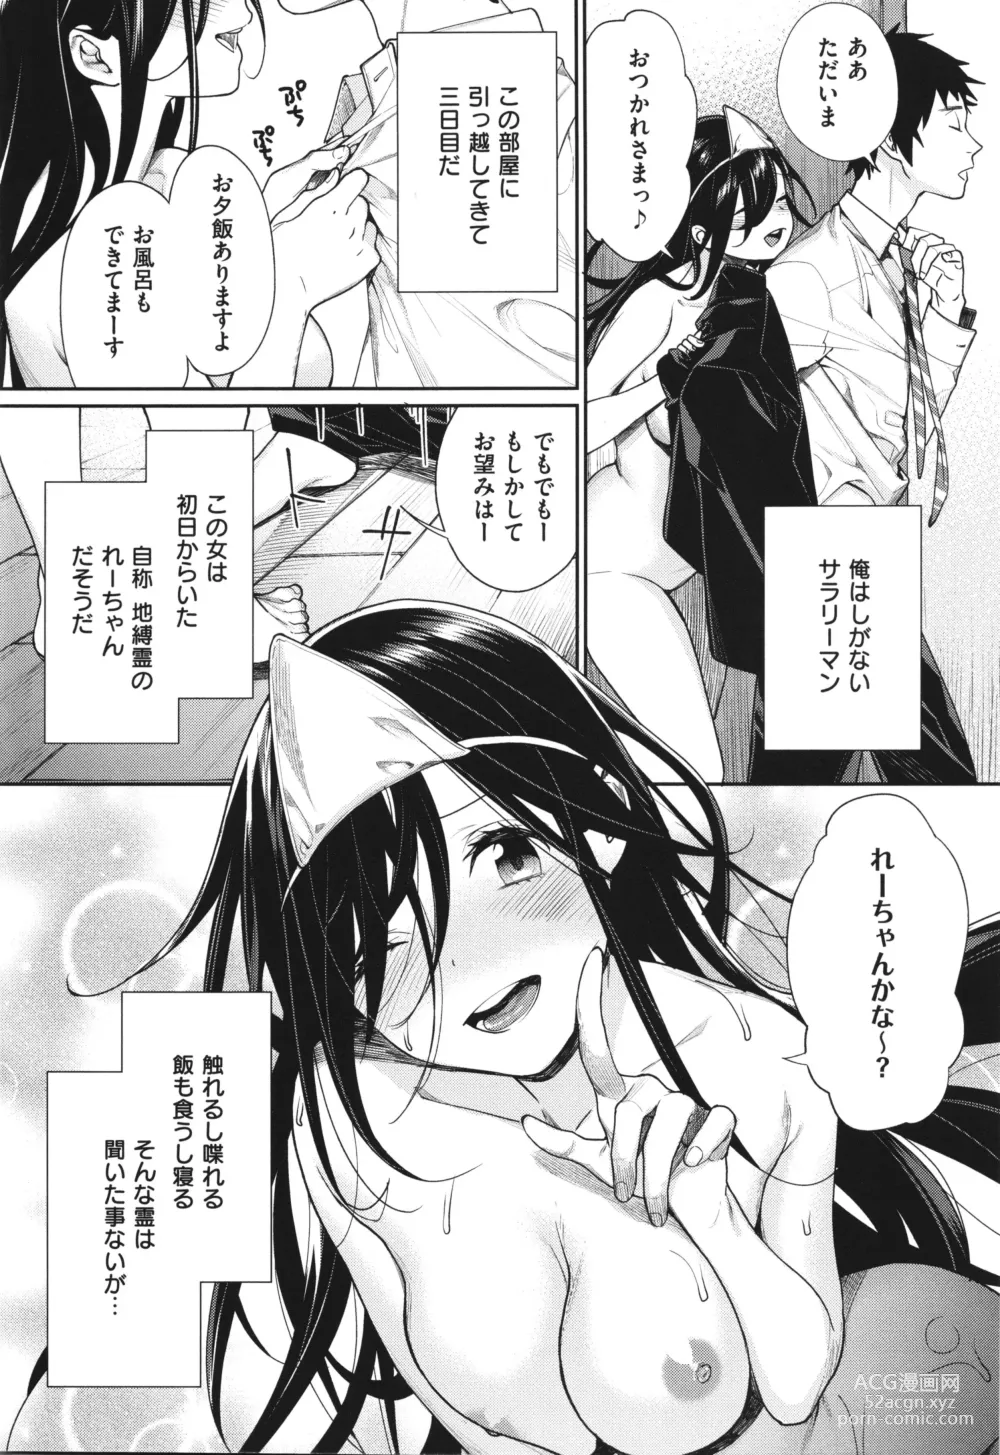 Page 7 of manga You & I